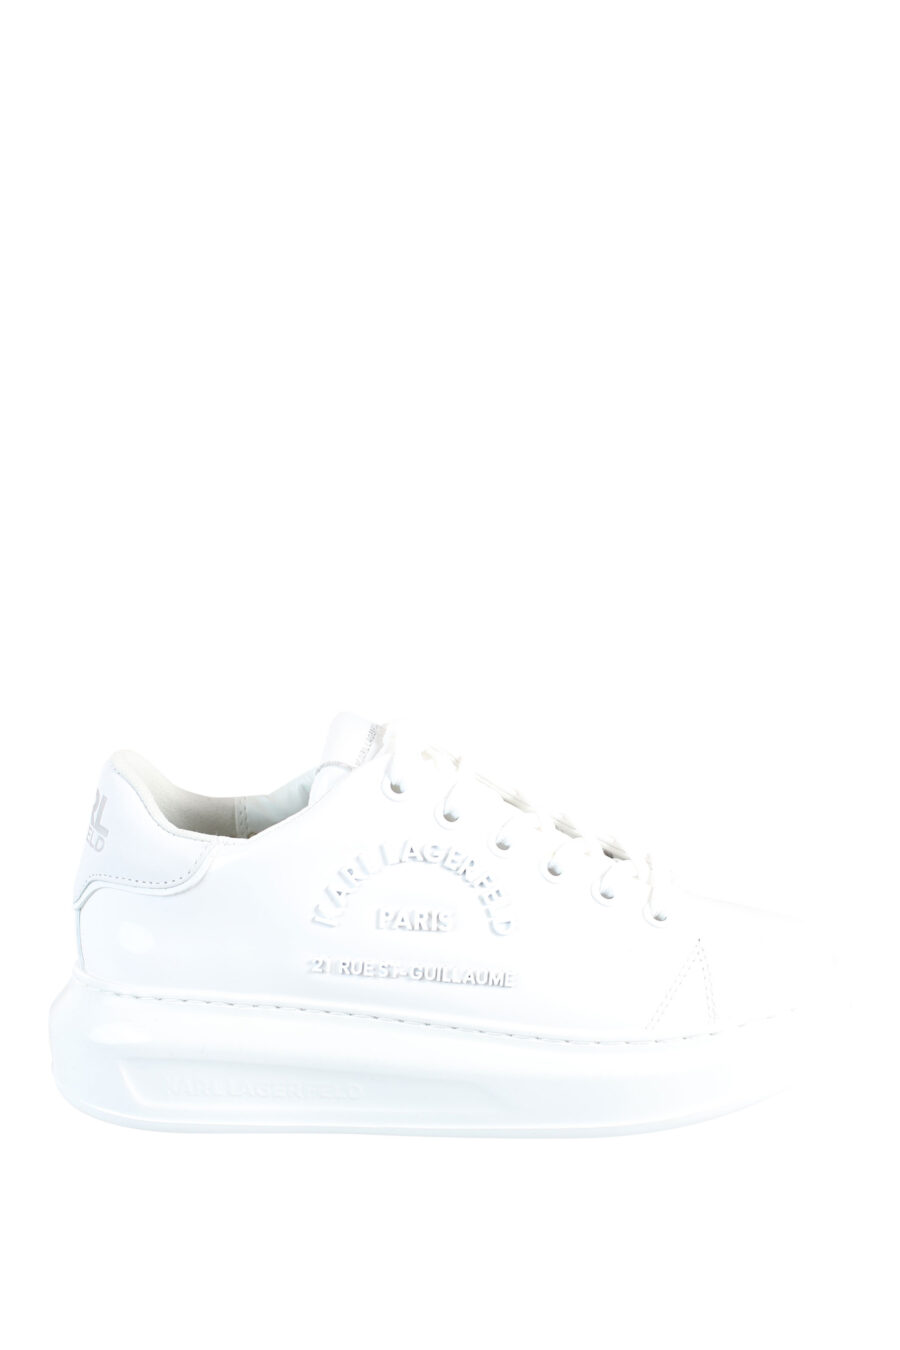 Zapatillas blancas brillantes con logo lettering "rue st guillaume" - IMG 0013 1